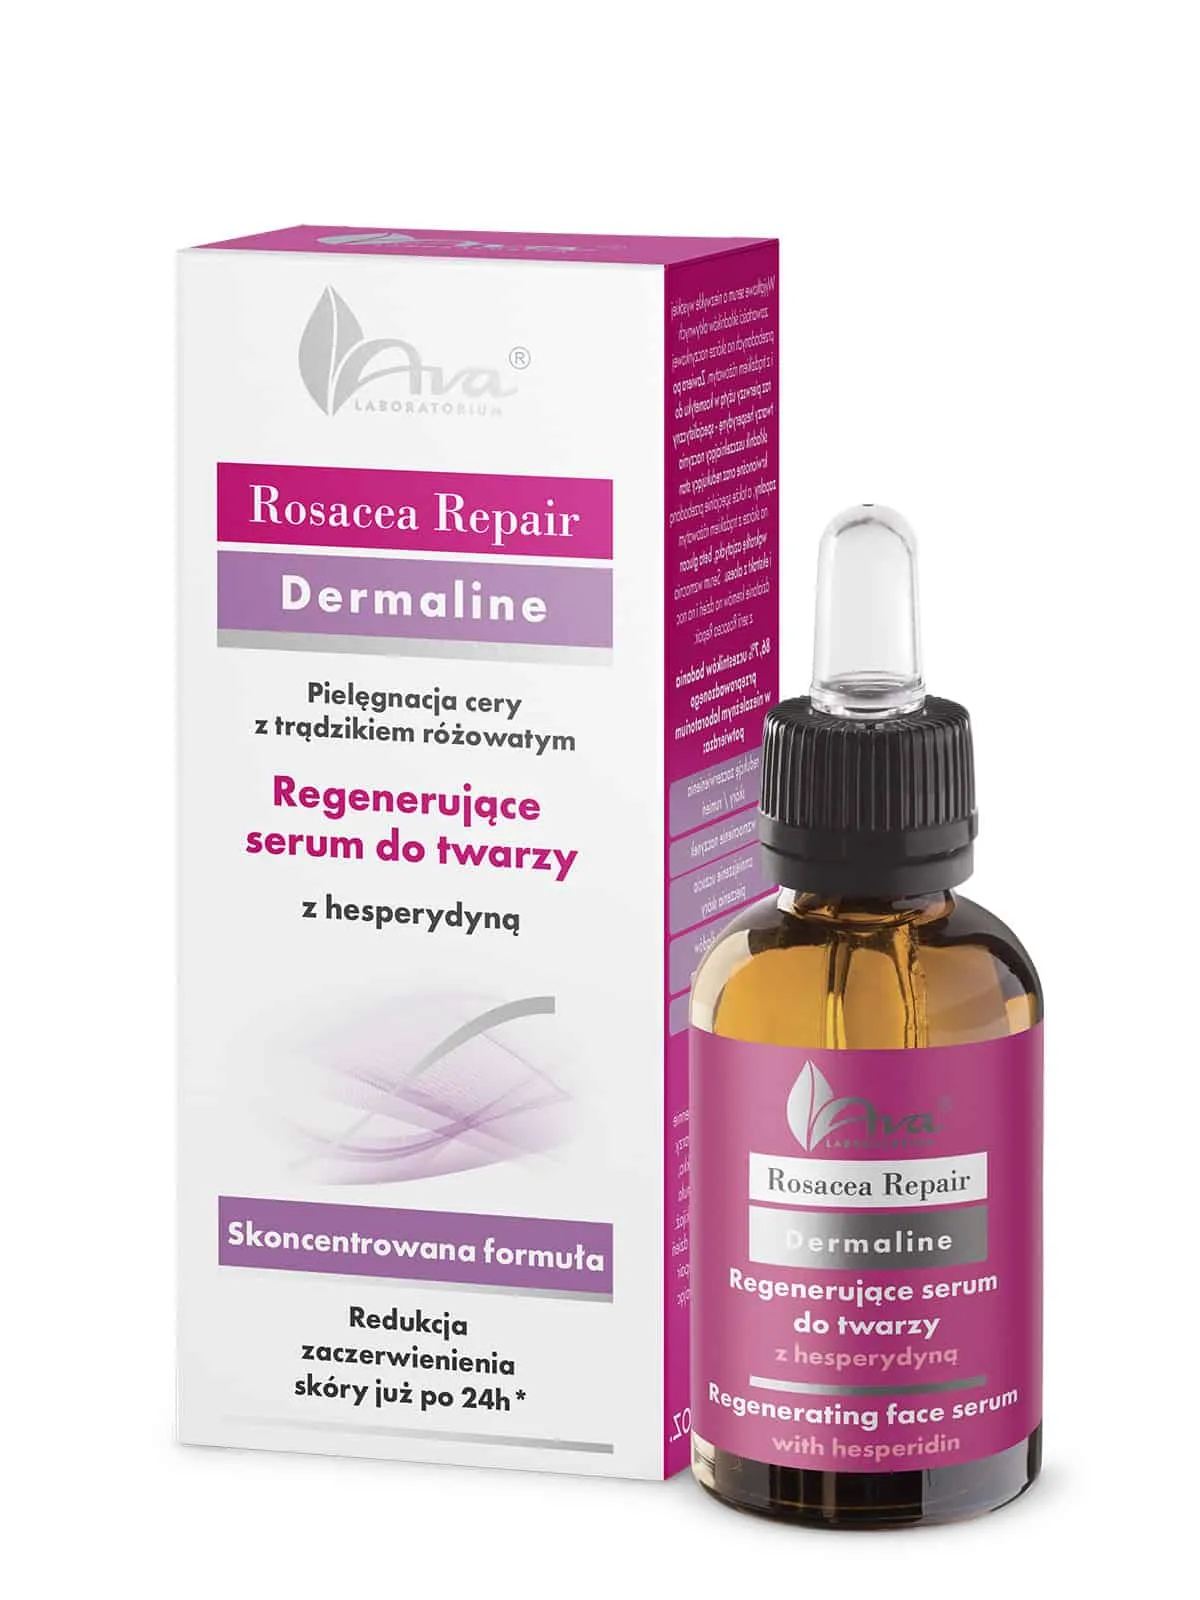 Ava Rosacea Repair, regenerujące serum do twarzy z hesperydyną, 30 ml